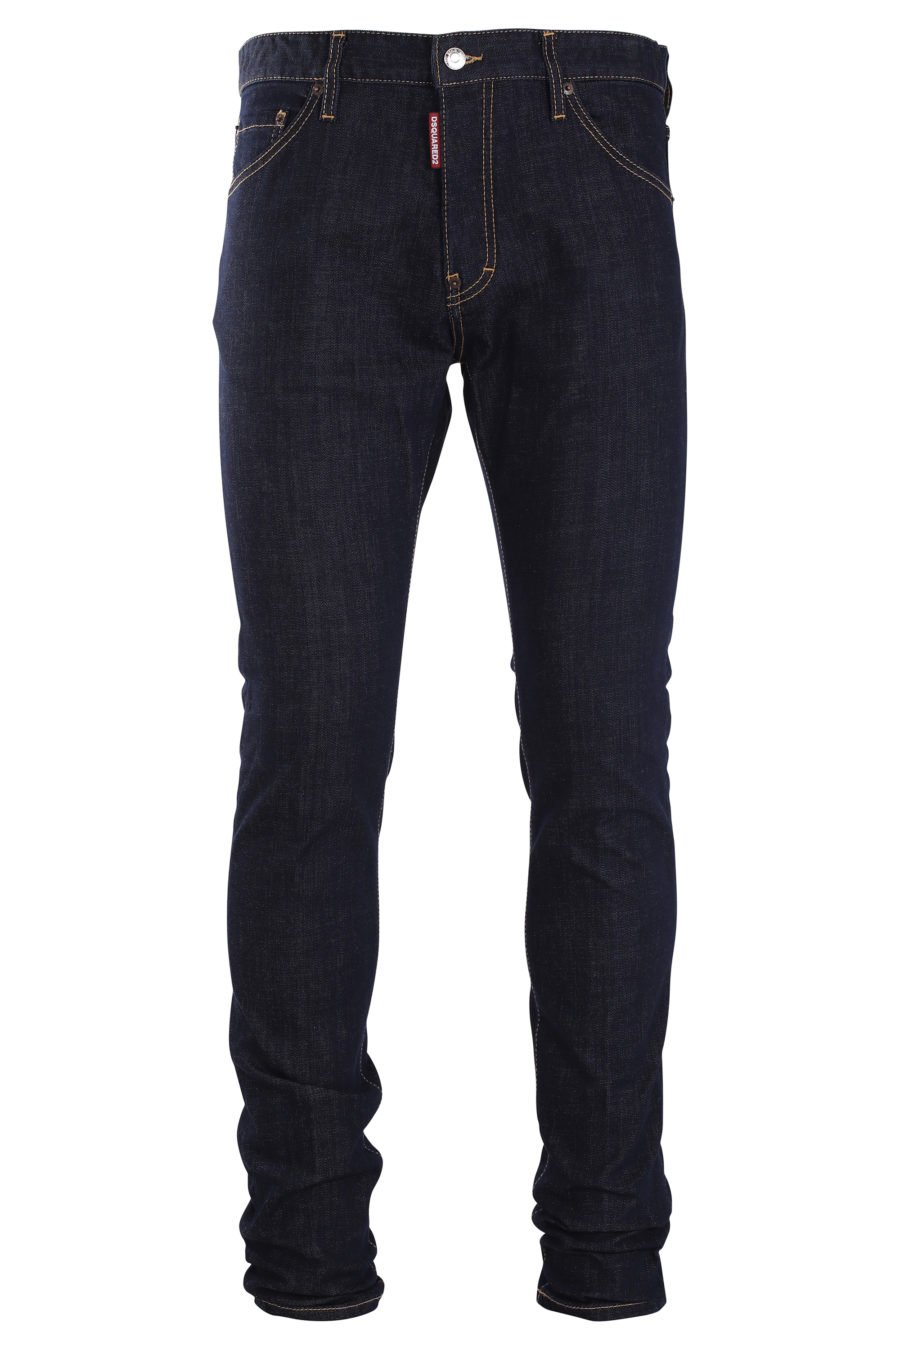 Cool guy jeans dark blue - IMG 9995